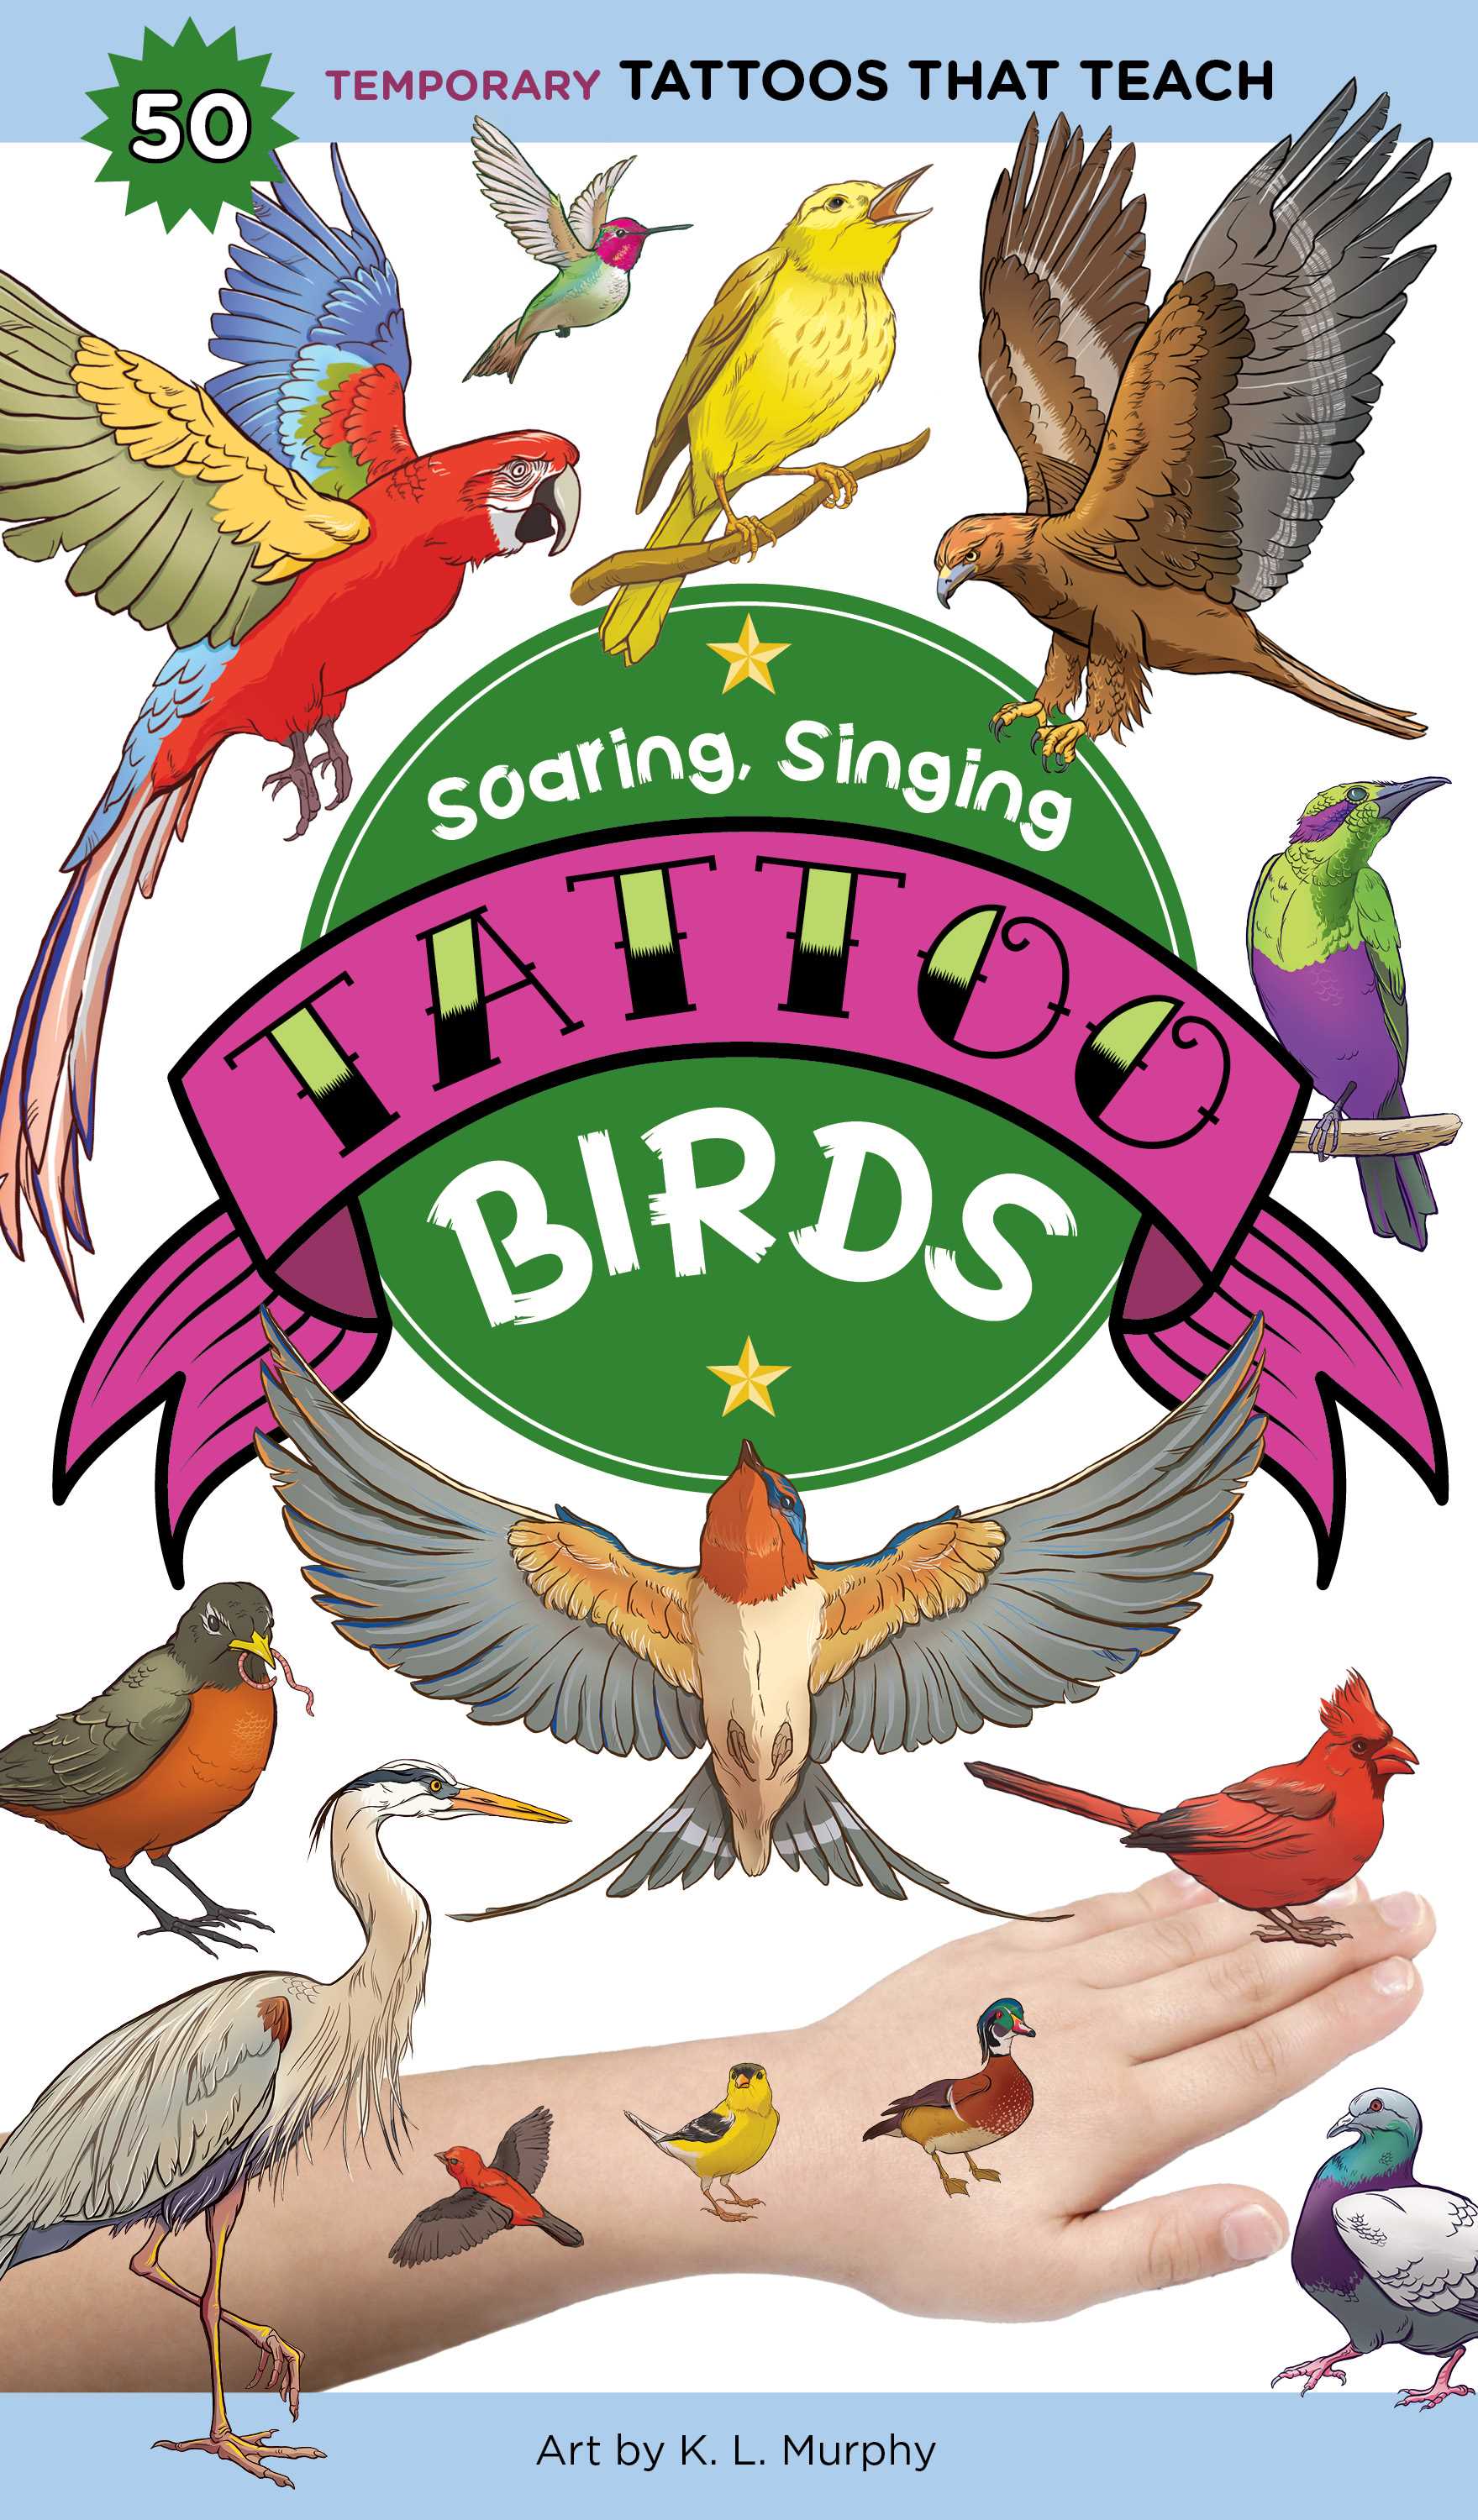 Soaring, Singing Tattoo Birds (Tattoos that Teach)